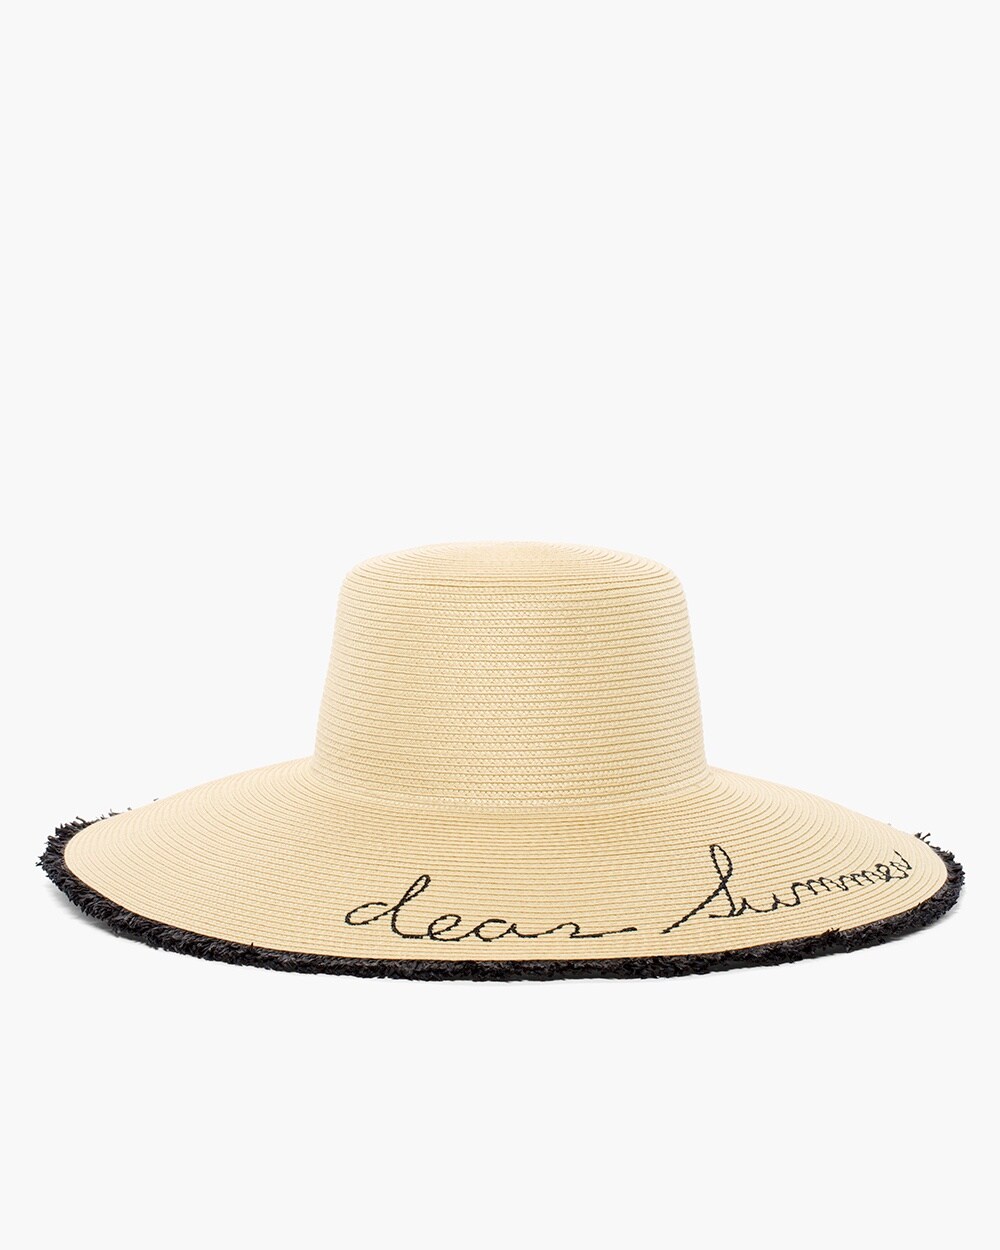 Dear Summer Hat